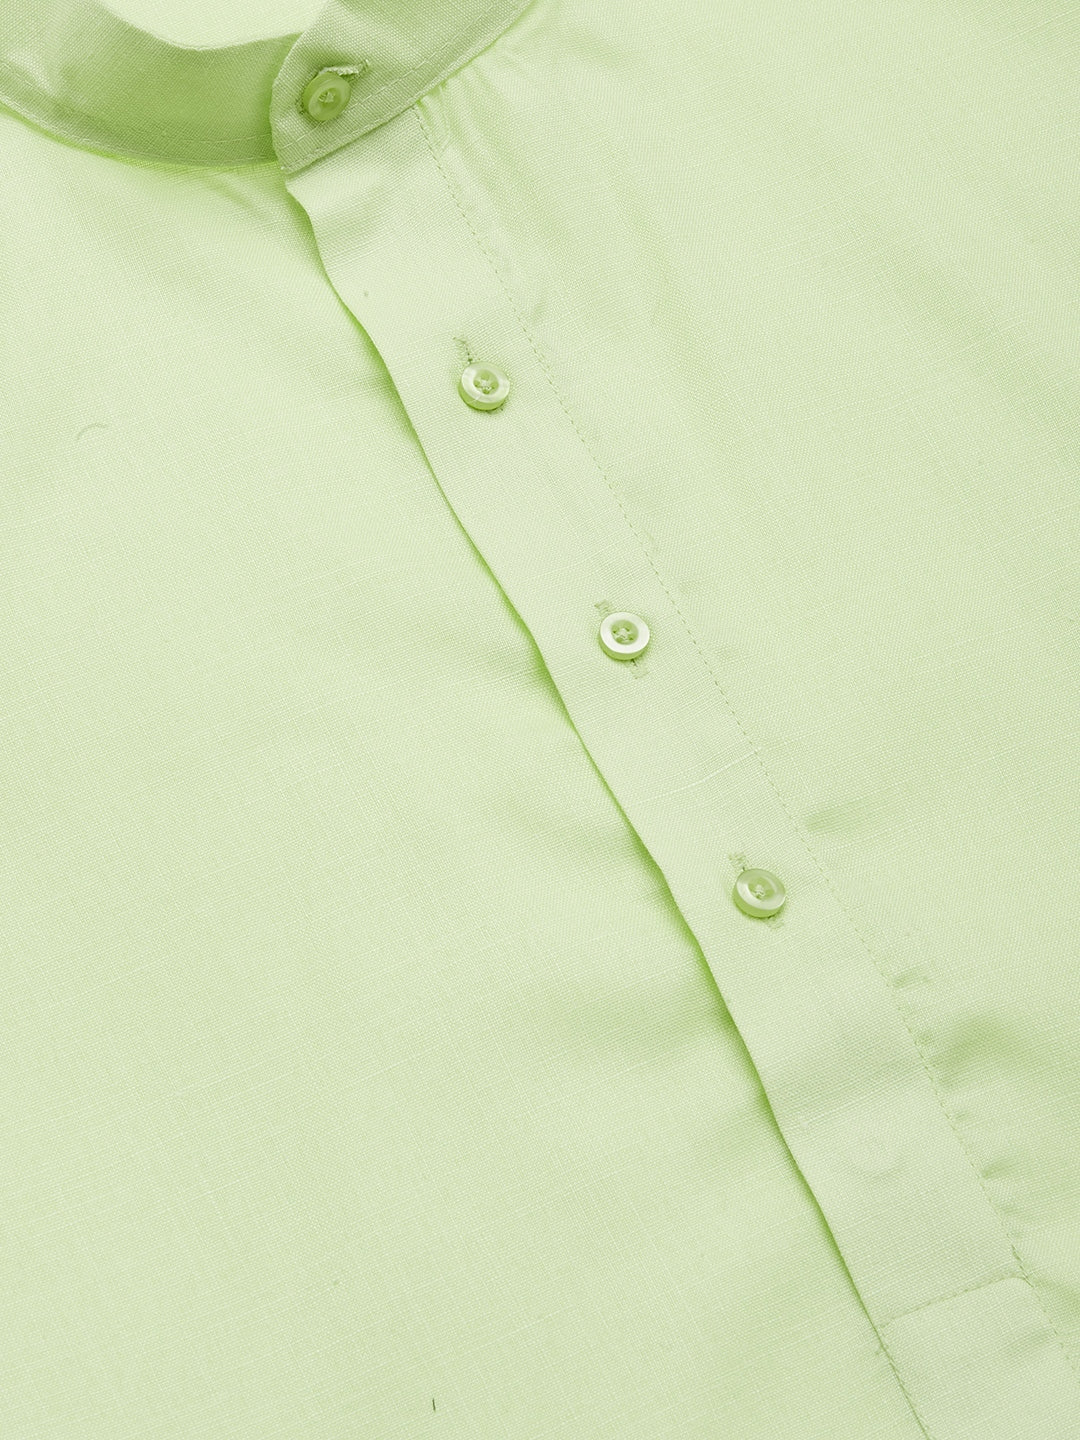 Jompers Men's Lime Cotton Solid Kurta Payjama Sets